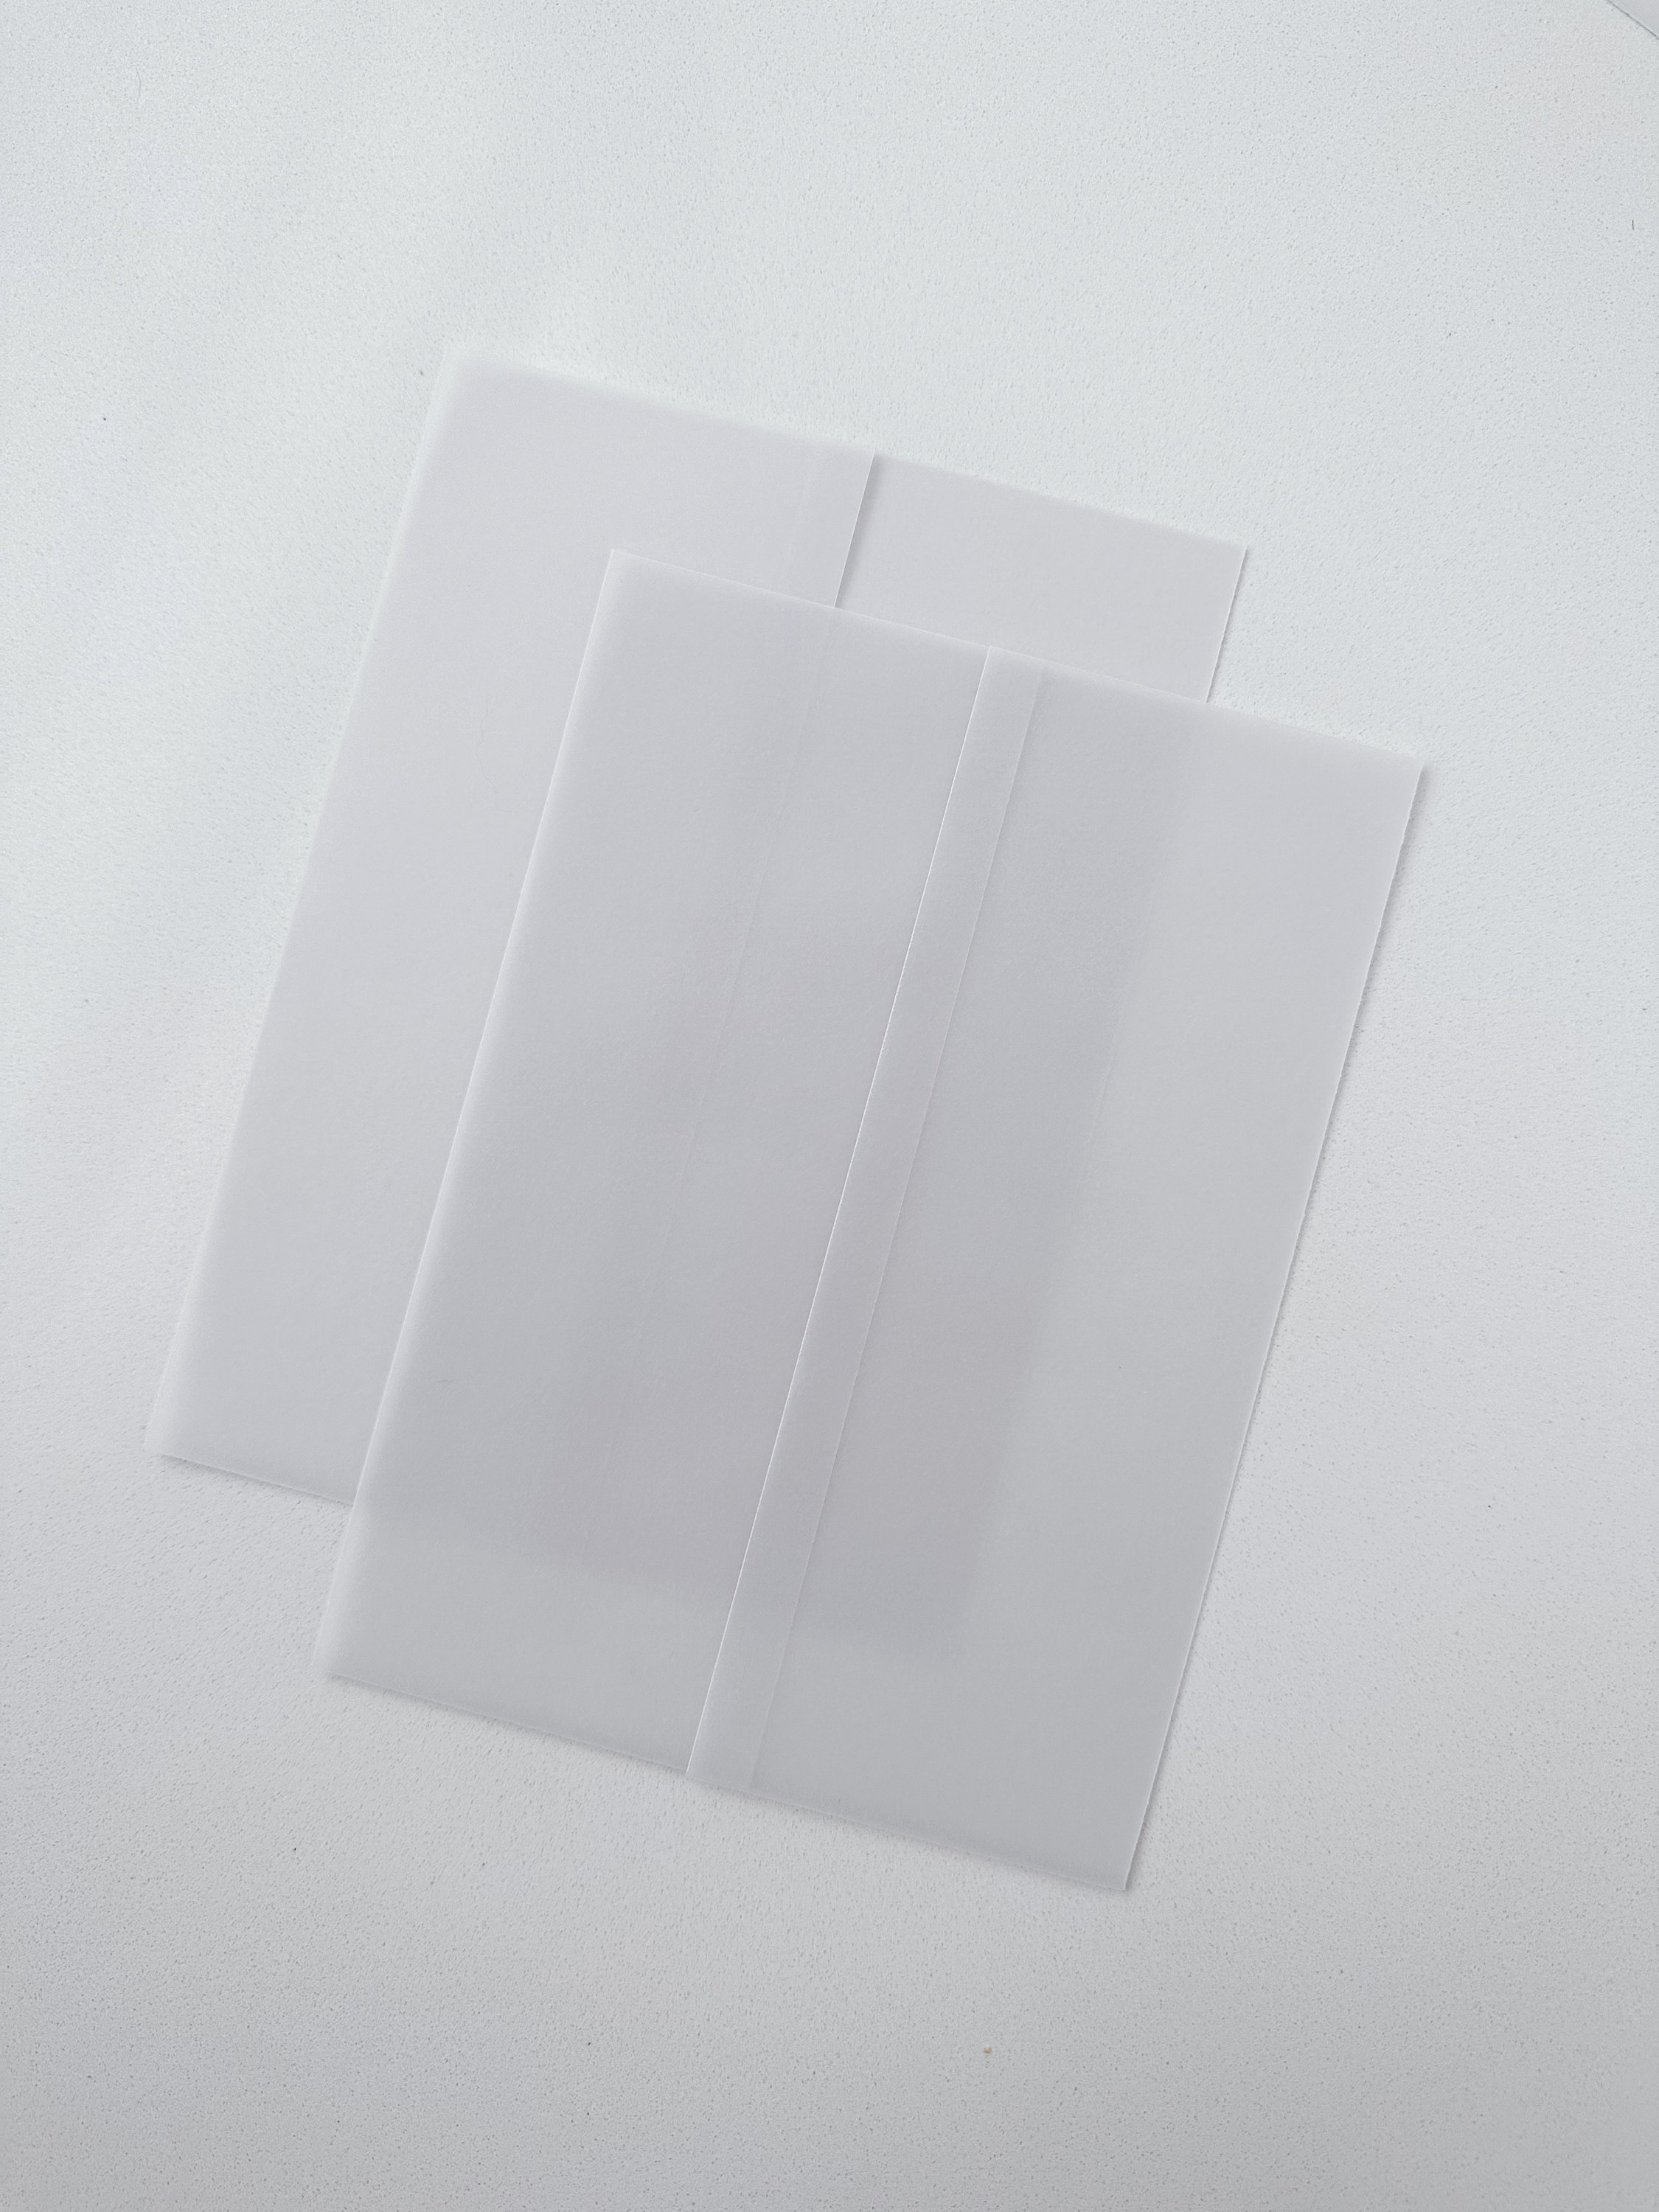 Ivory Translucent Vellum Wrap - 7 x 11, 27lb Glama - LCI Paper